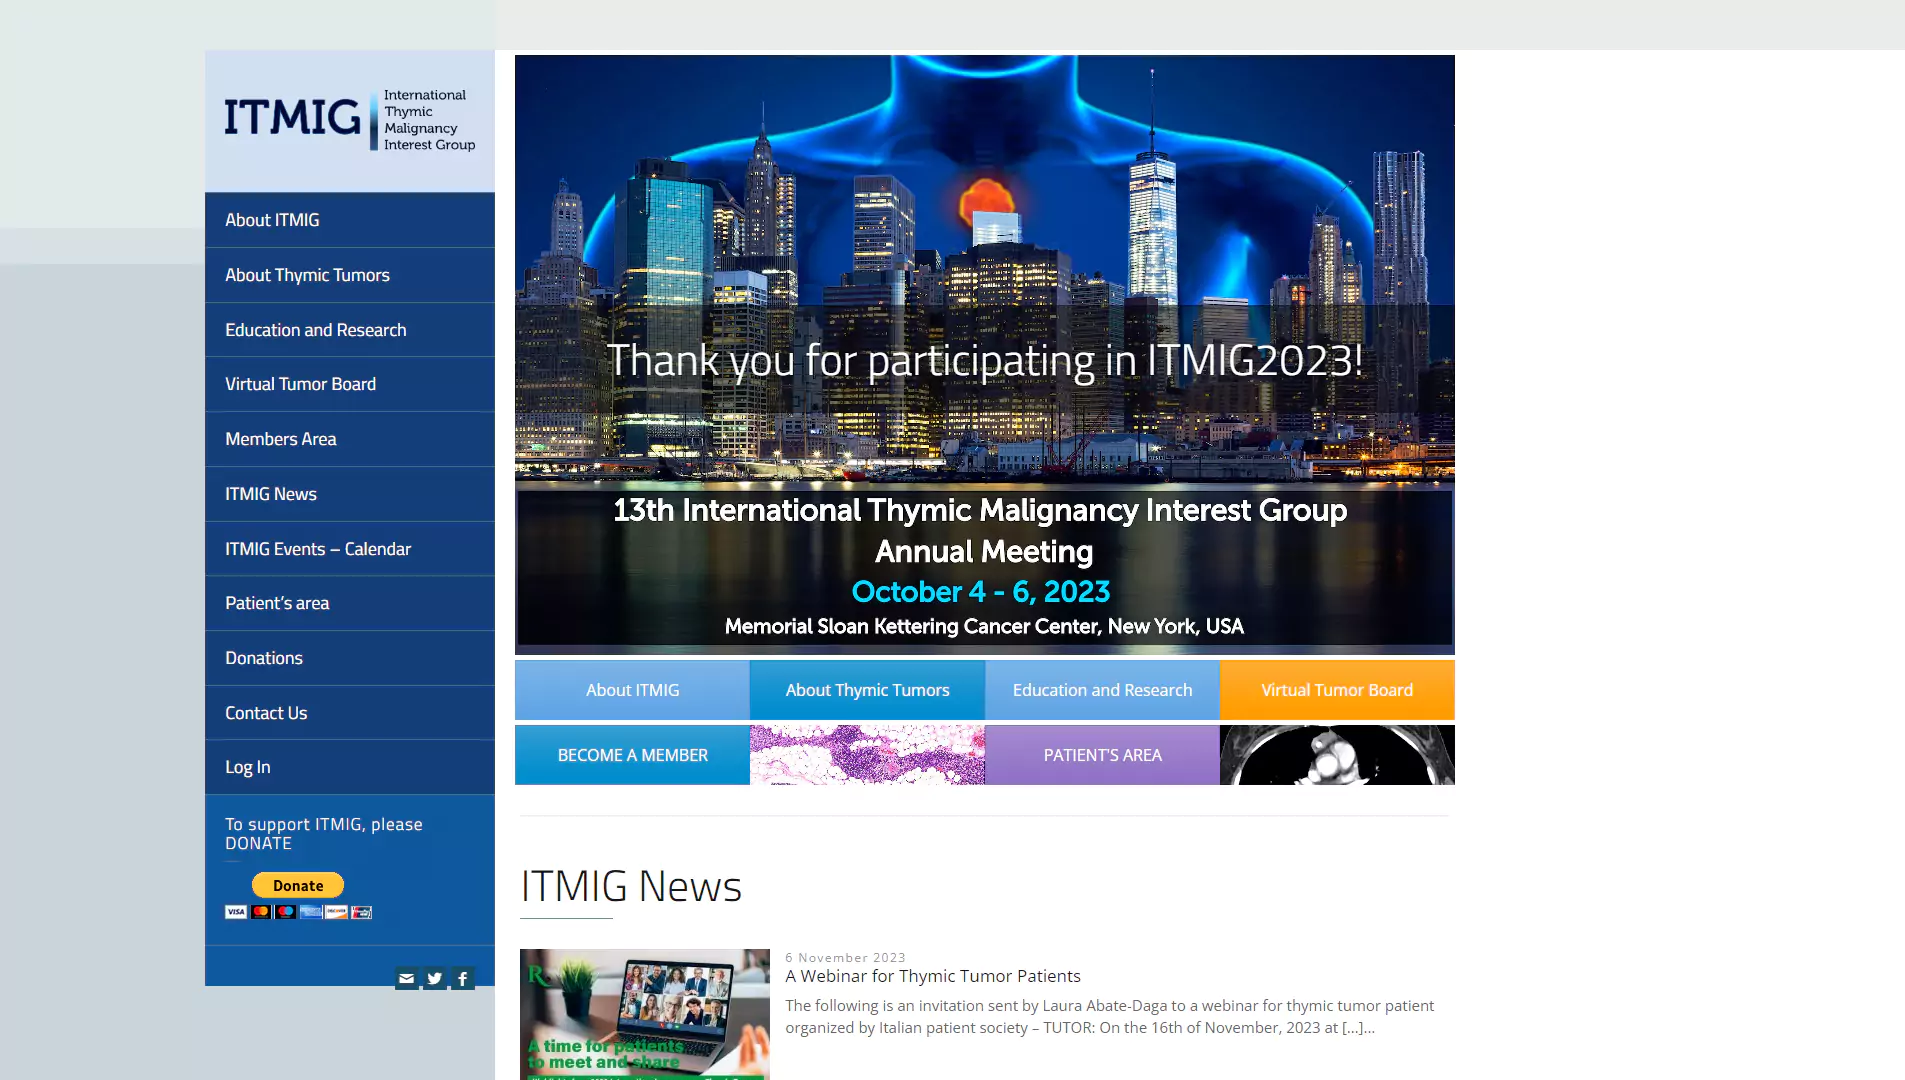 ITMIG: International Thymic Malignancy Interest Group